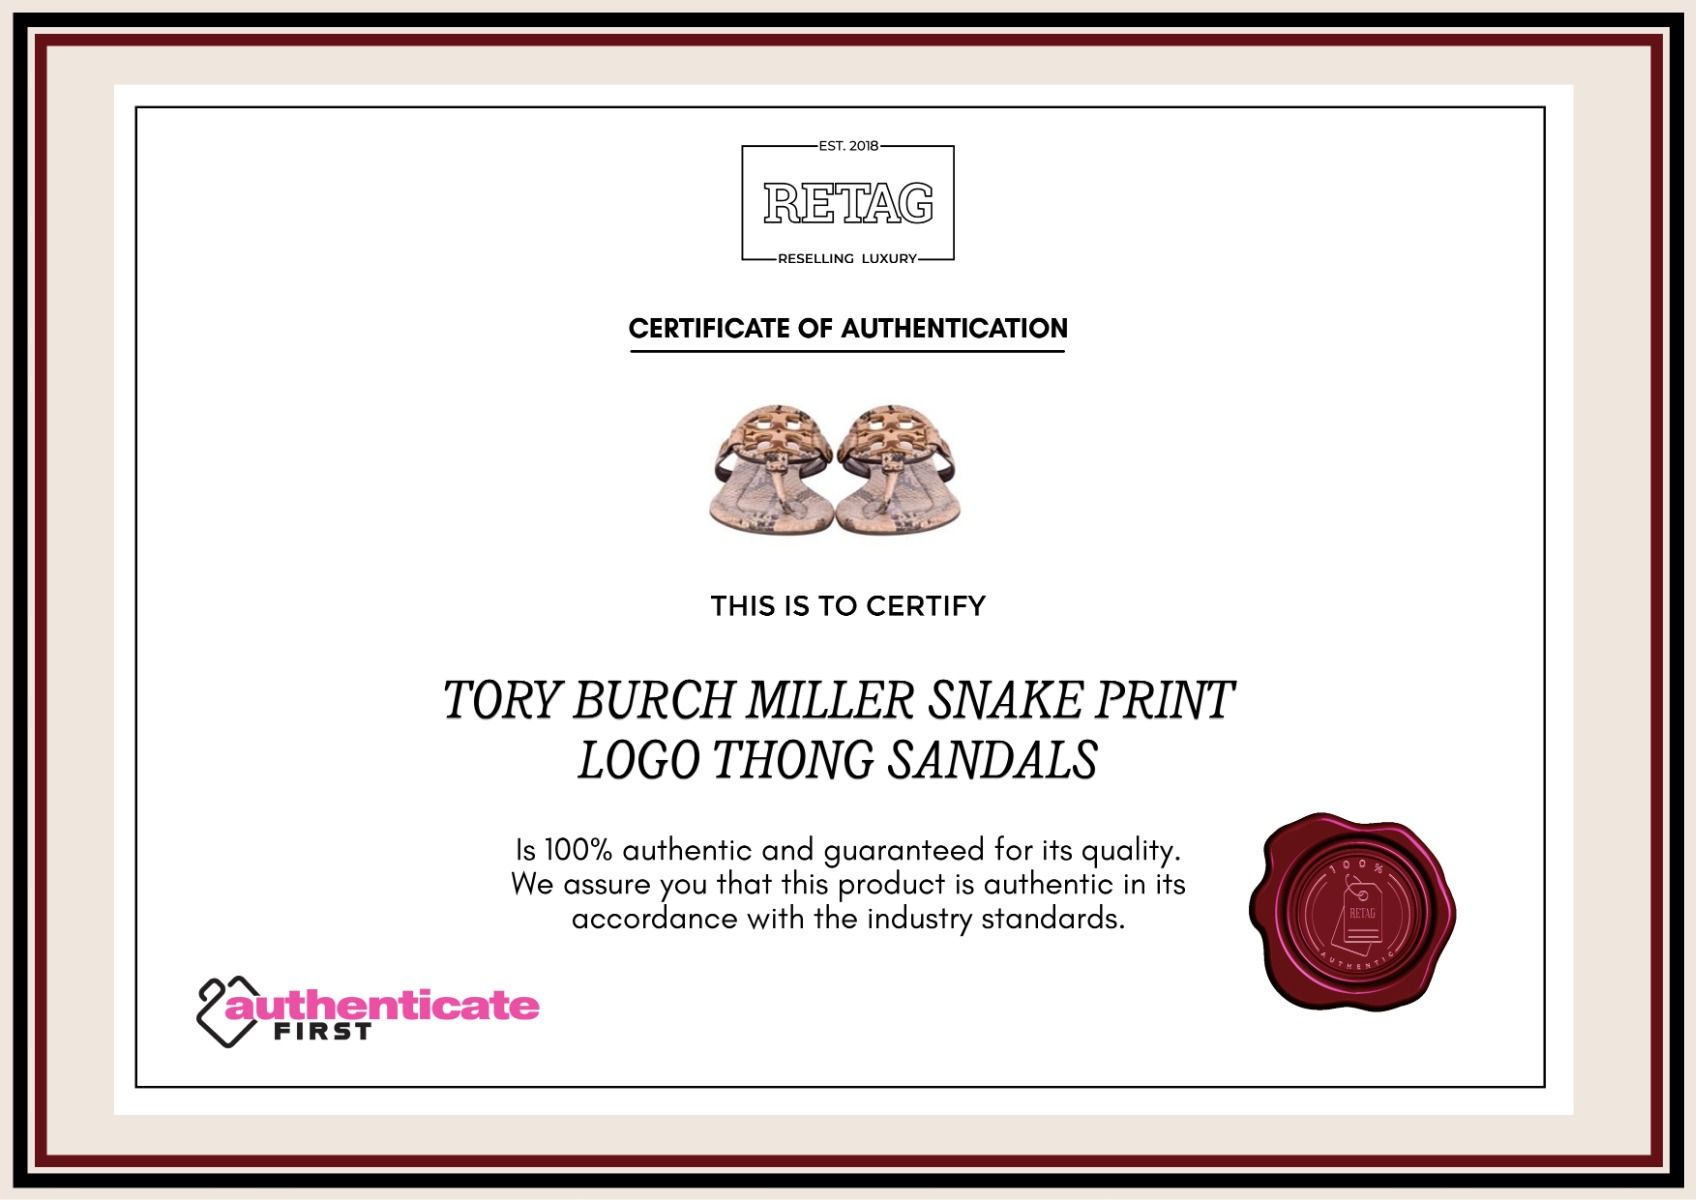 Tory Burch Miller Snake Print Logo Thong Sandals